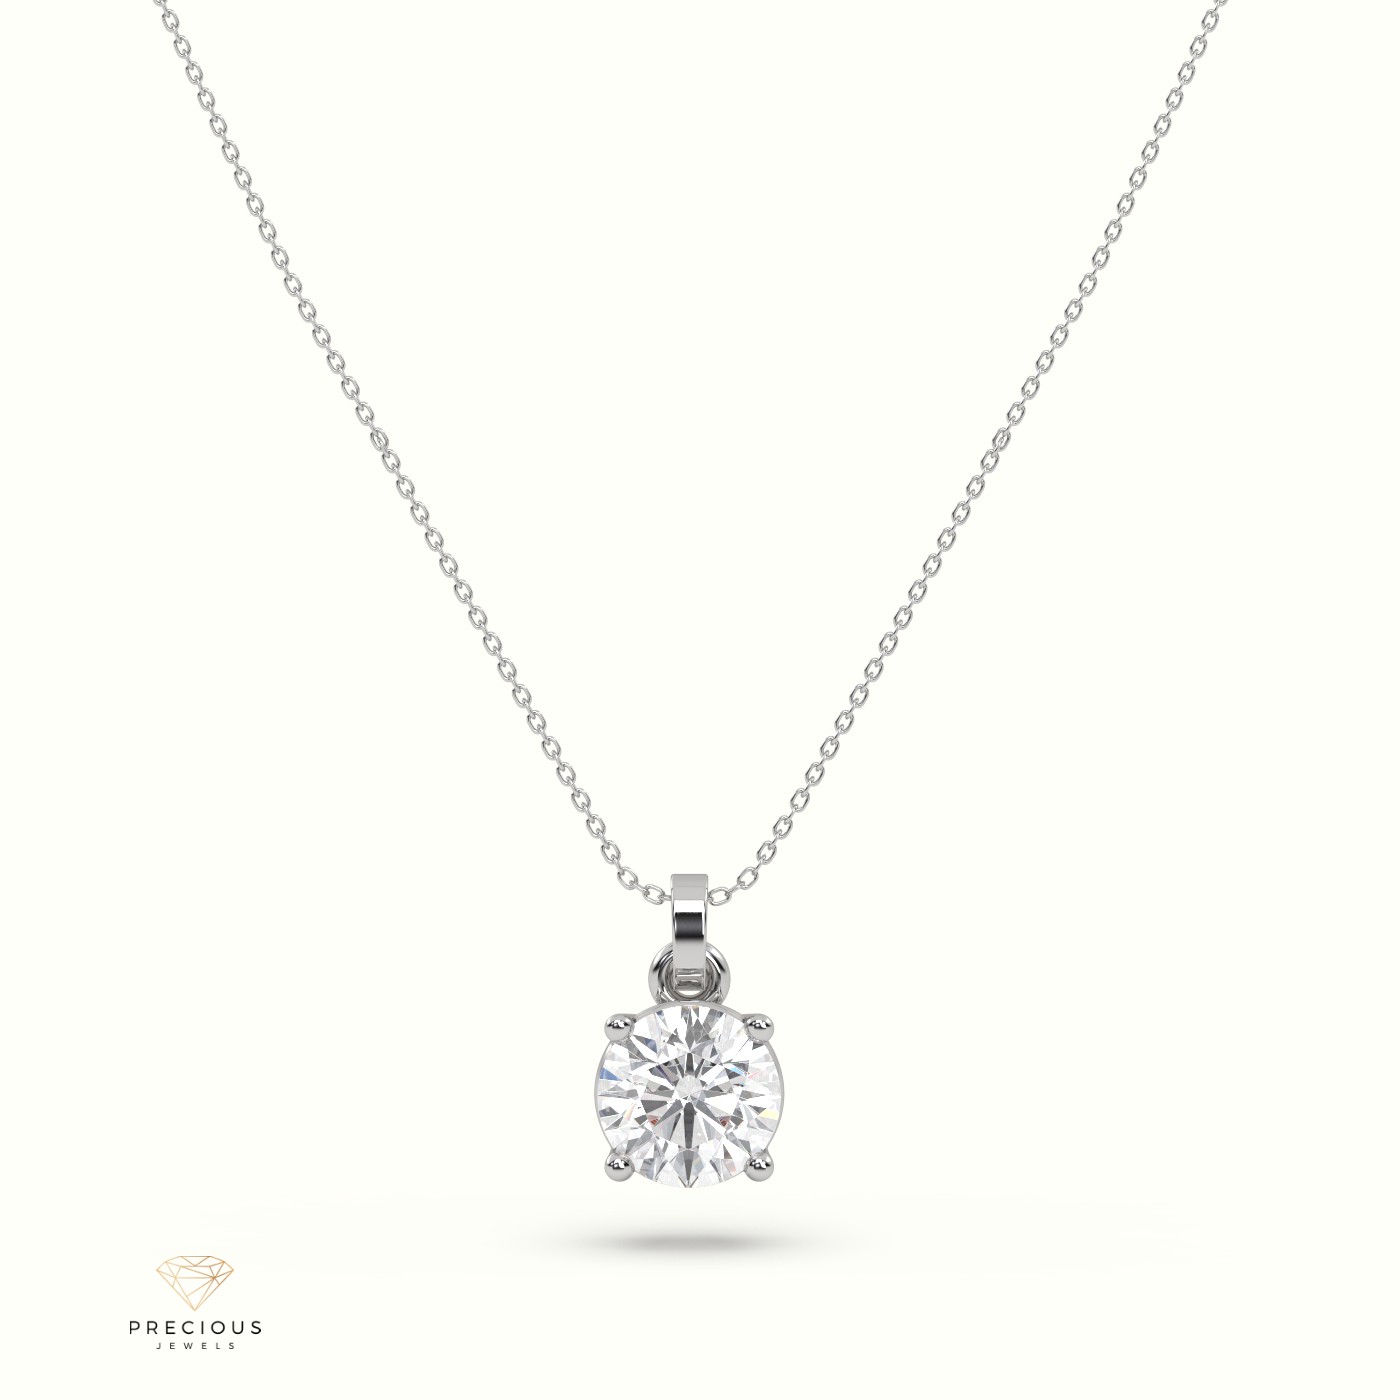 18k white gold diamond solitair pendant 0.70 carat 4 round shaped prongs